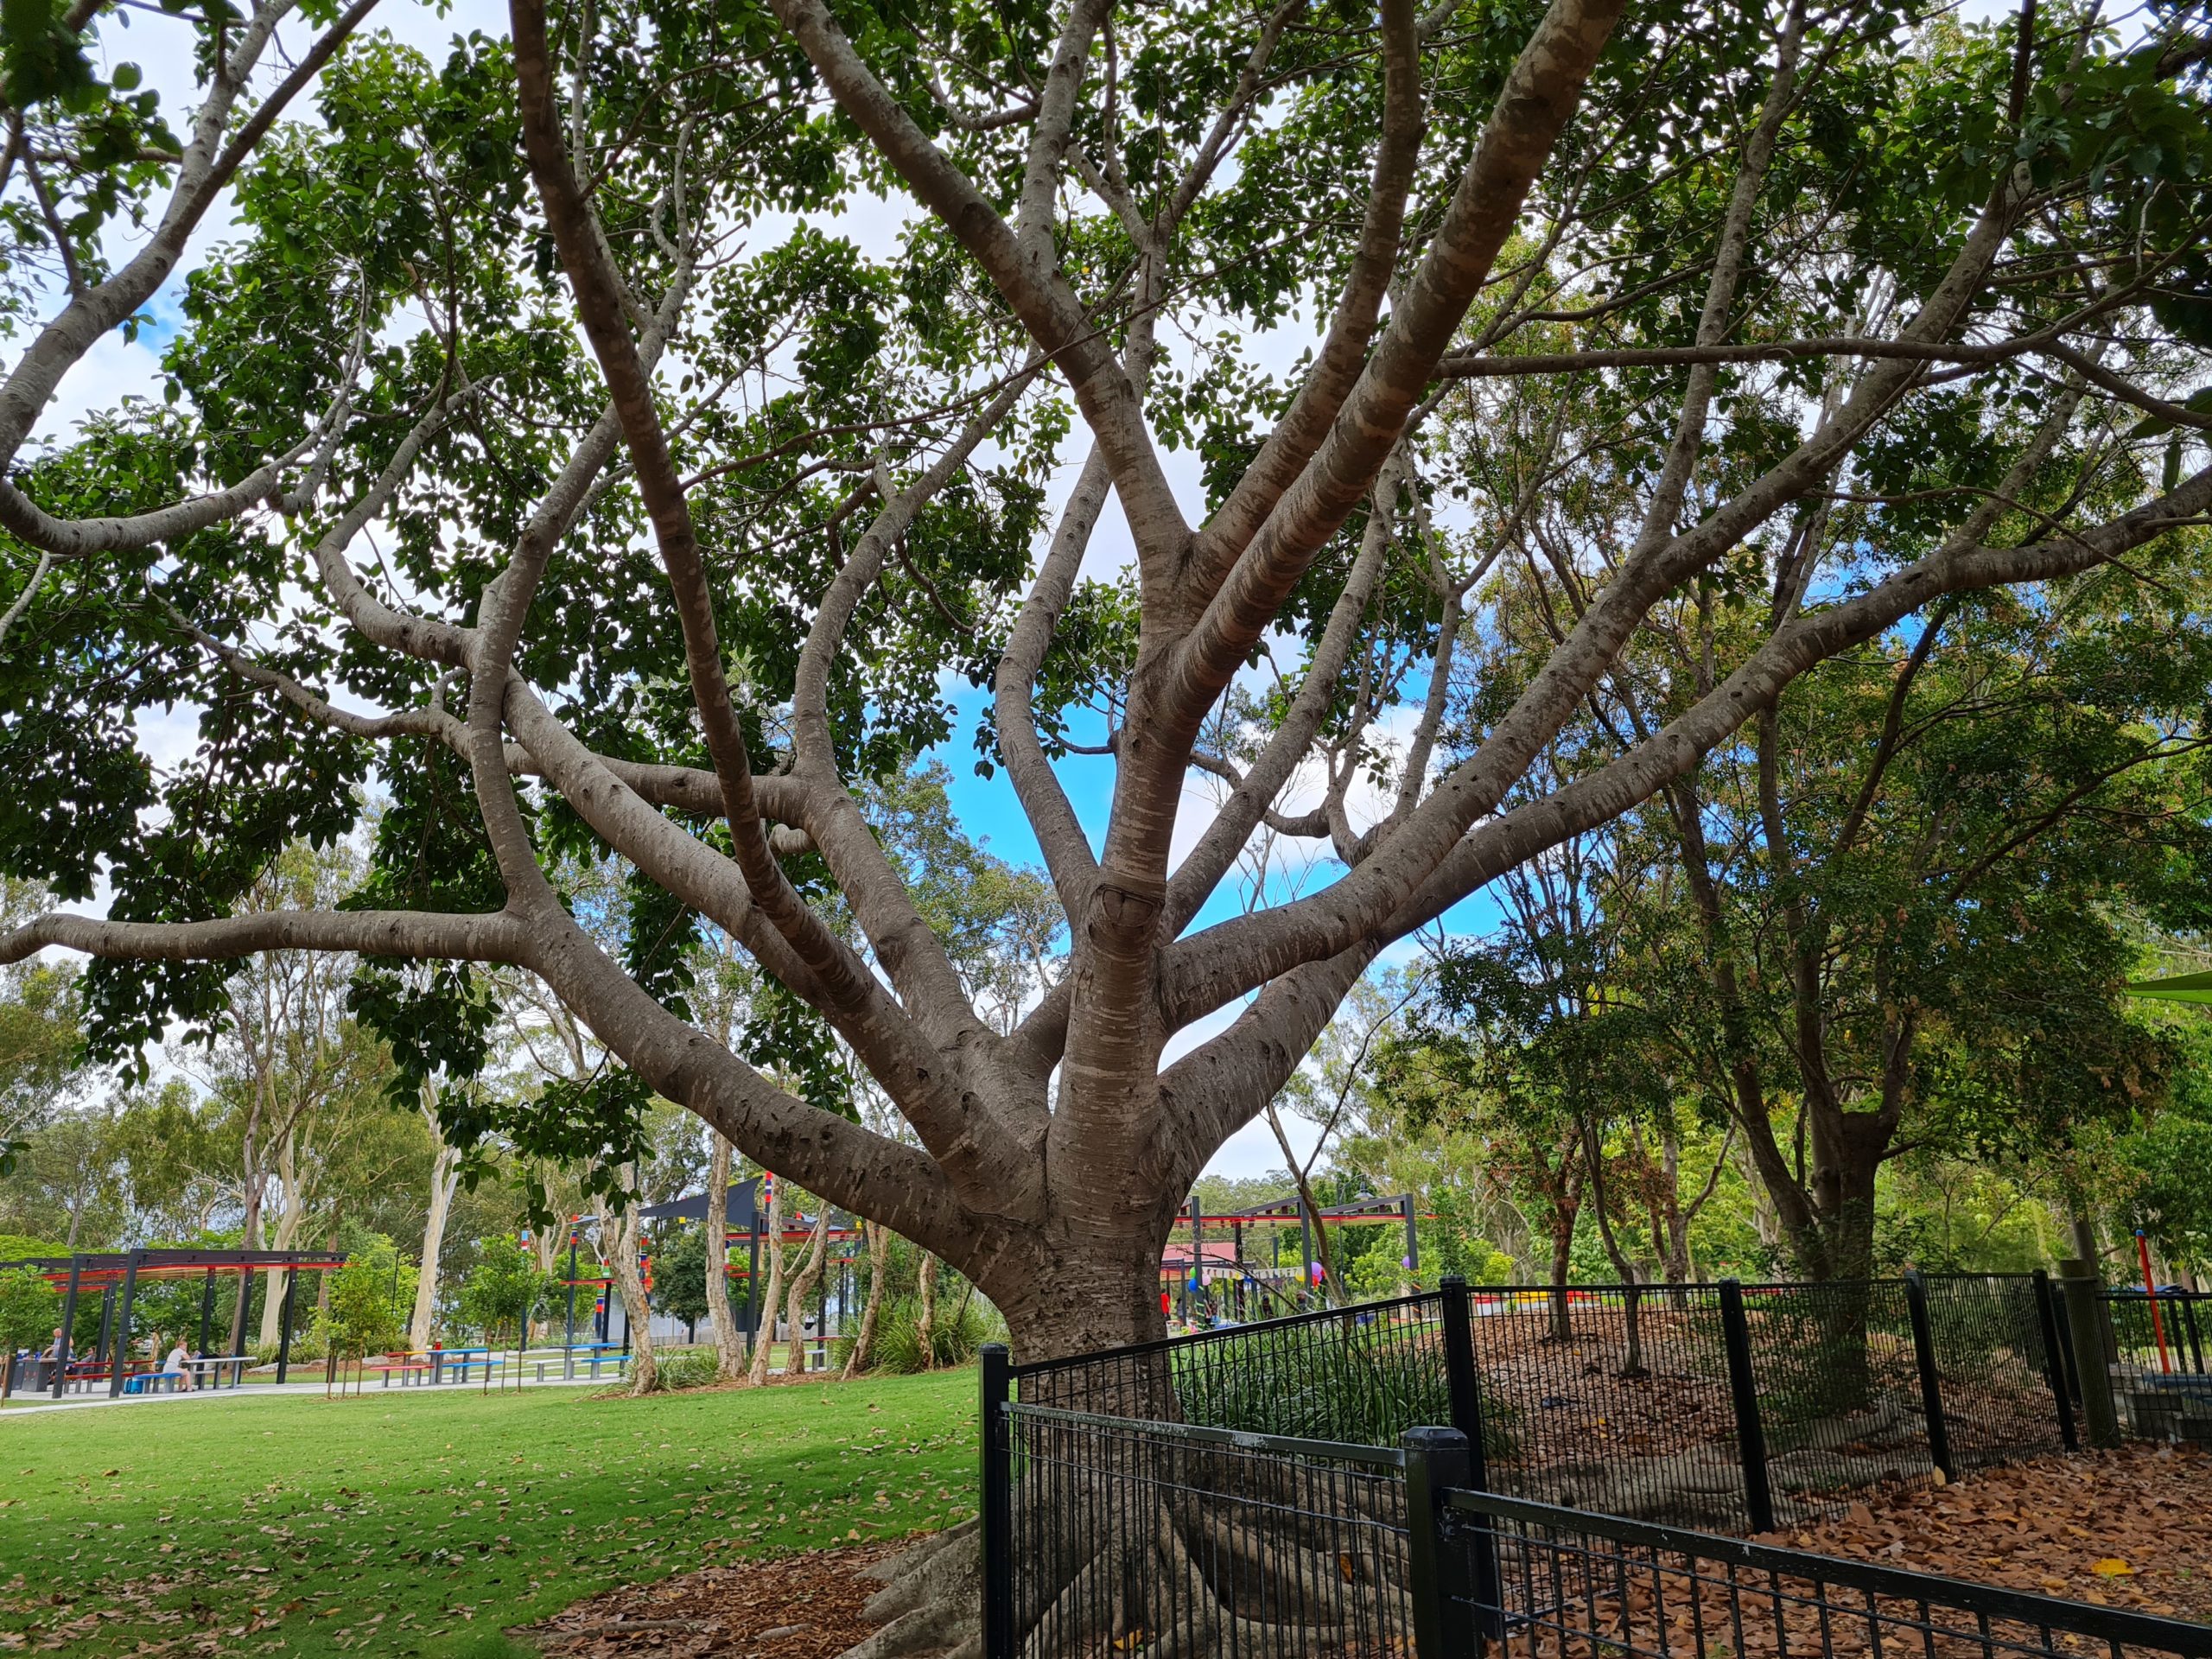 Park with trees to climb